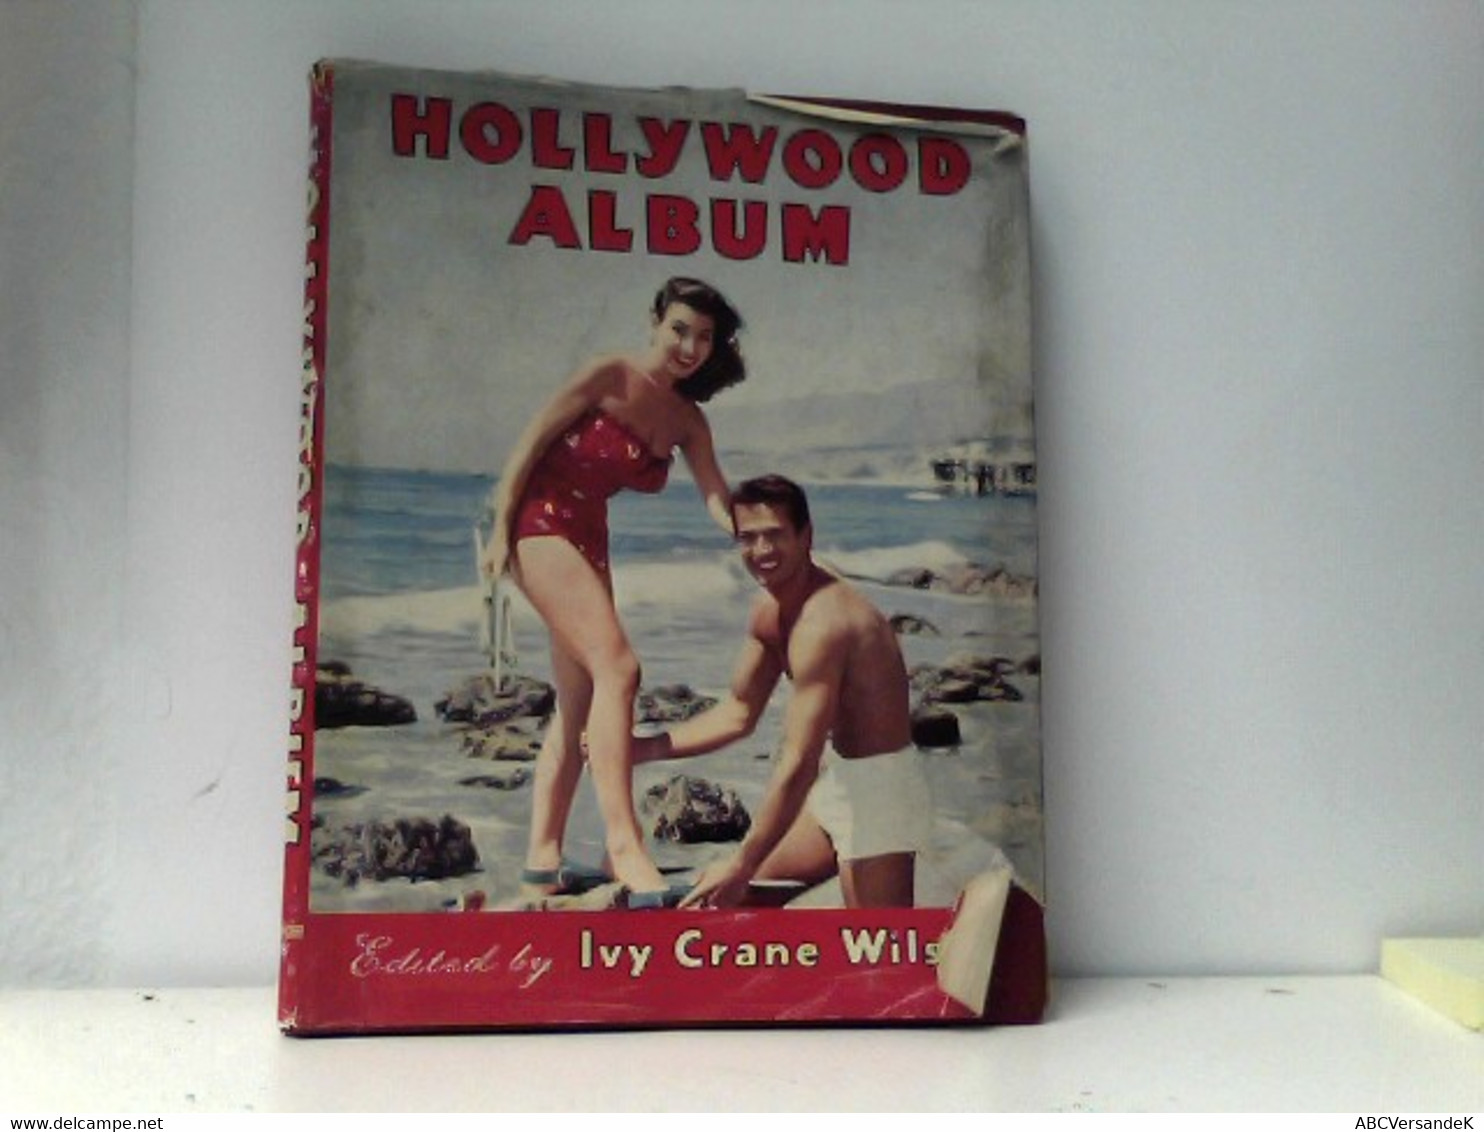 The Tenth Hollywood Album - Cine